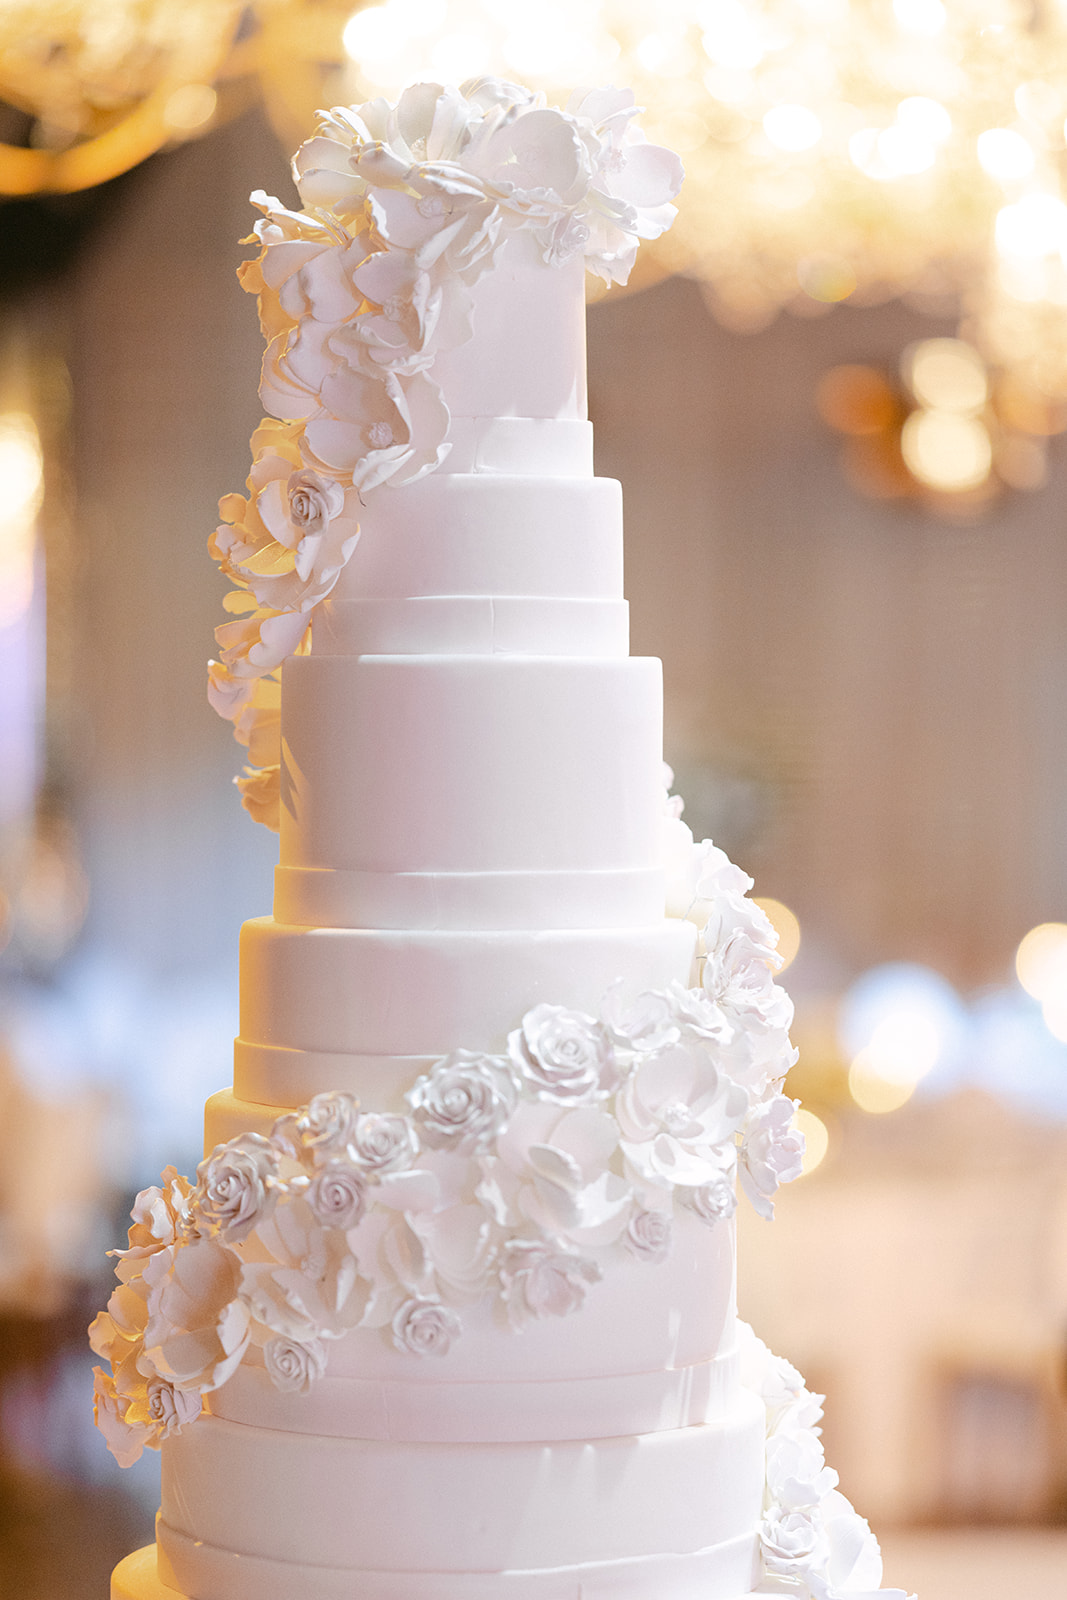 Tall all white wedding cake for Red Rock Casino Timeless Modern Wedding 